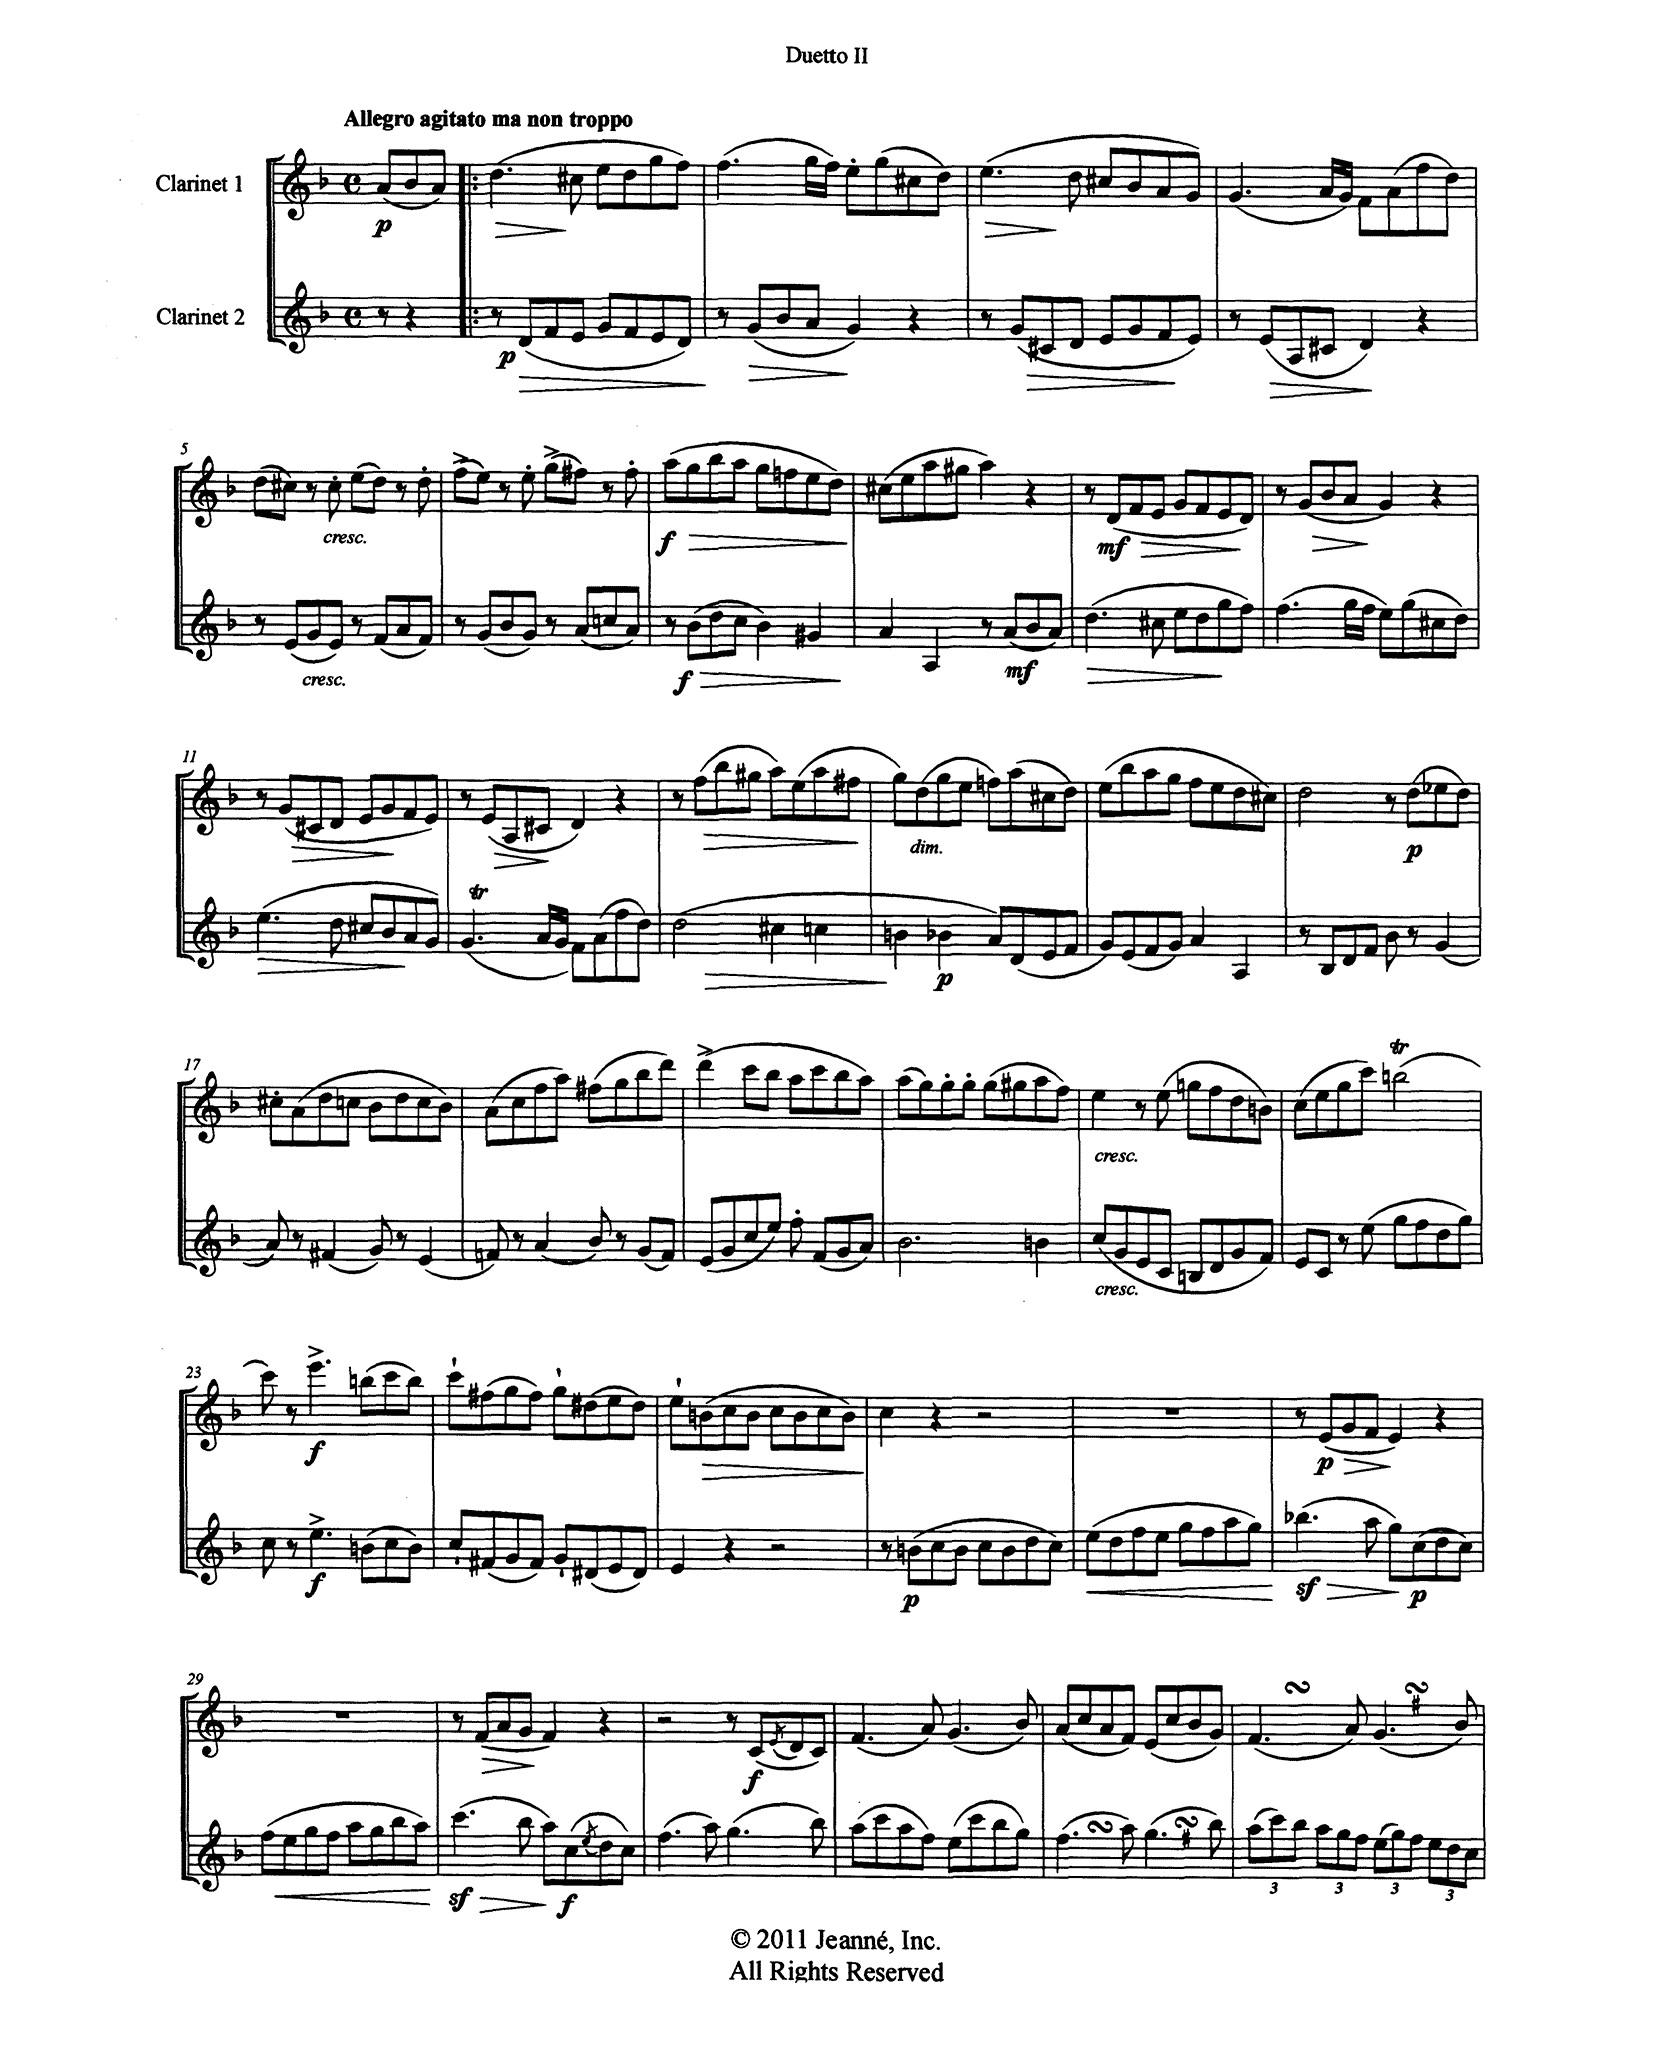 Crusell Clarinet Duet No. 2 in D Minor score - Movement 1